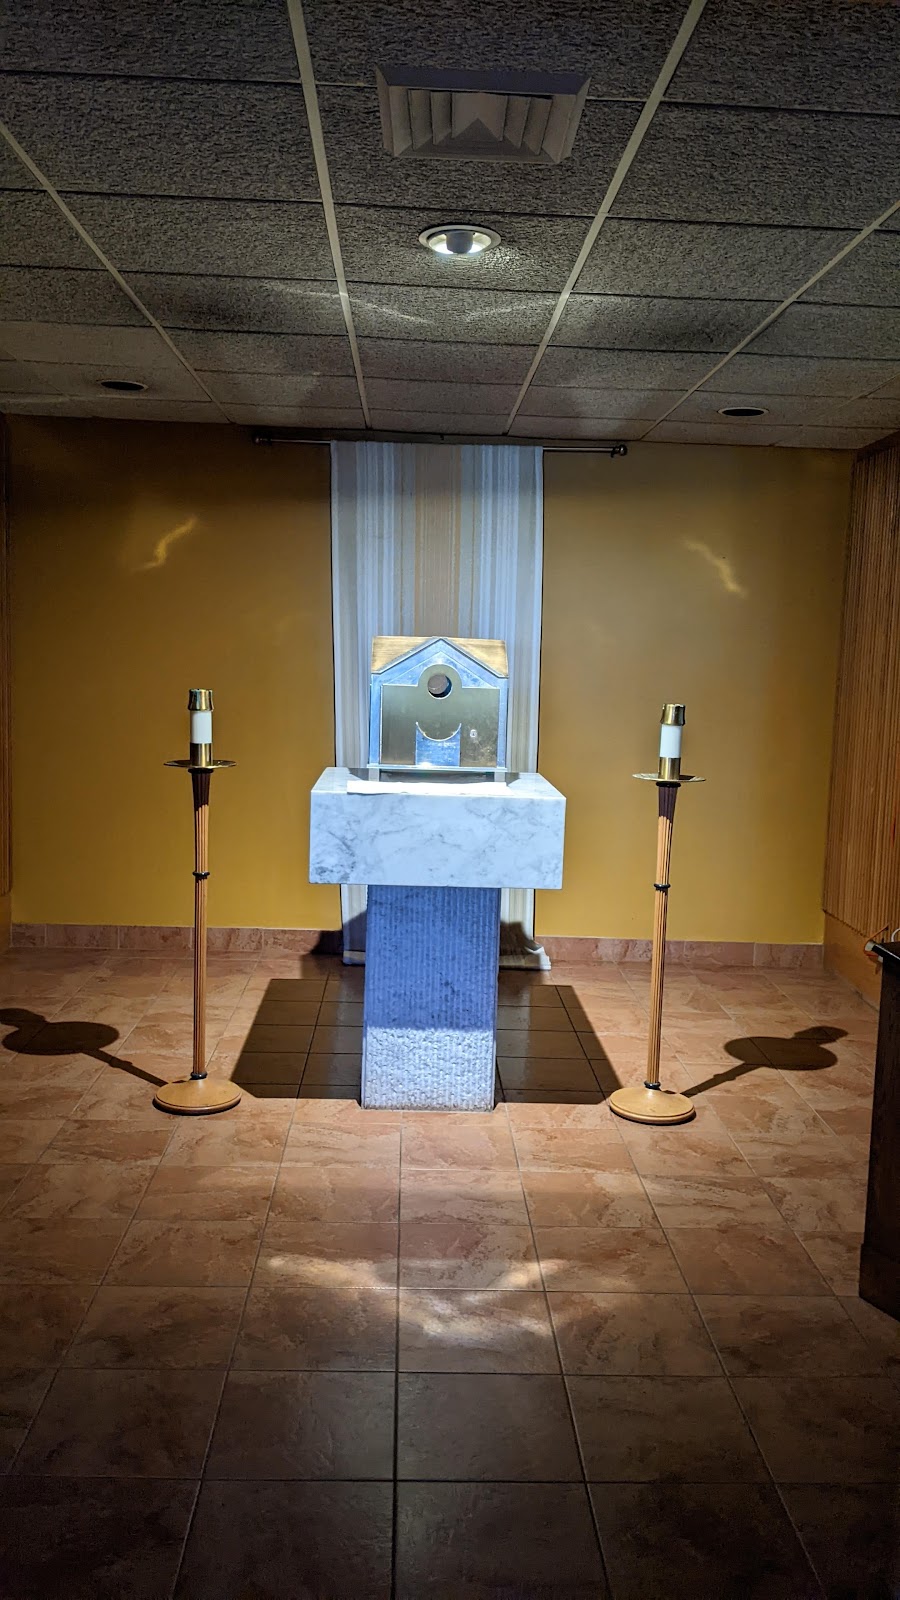 Our Lady of Lourdes Roman Catholic Church | 300 Central Ave, Mountainside, NJ 07092 | Phone: (908) 232-1162